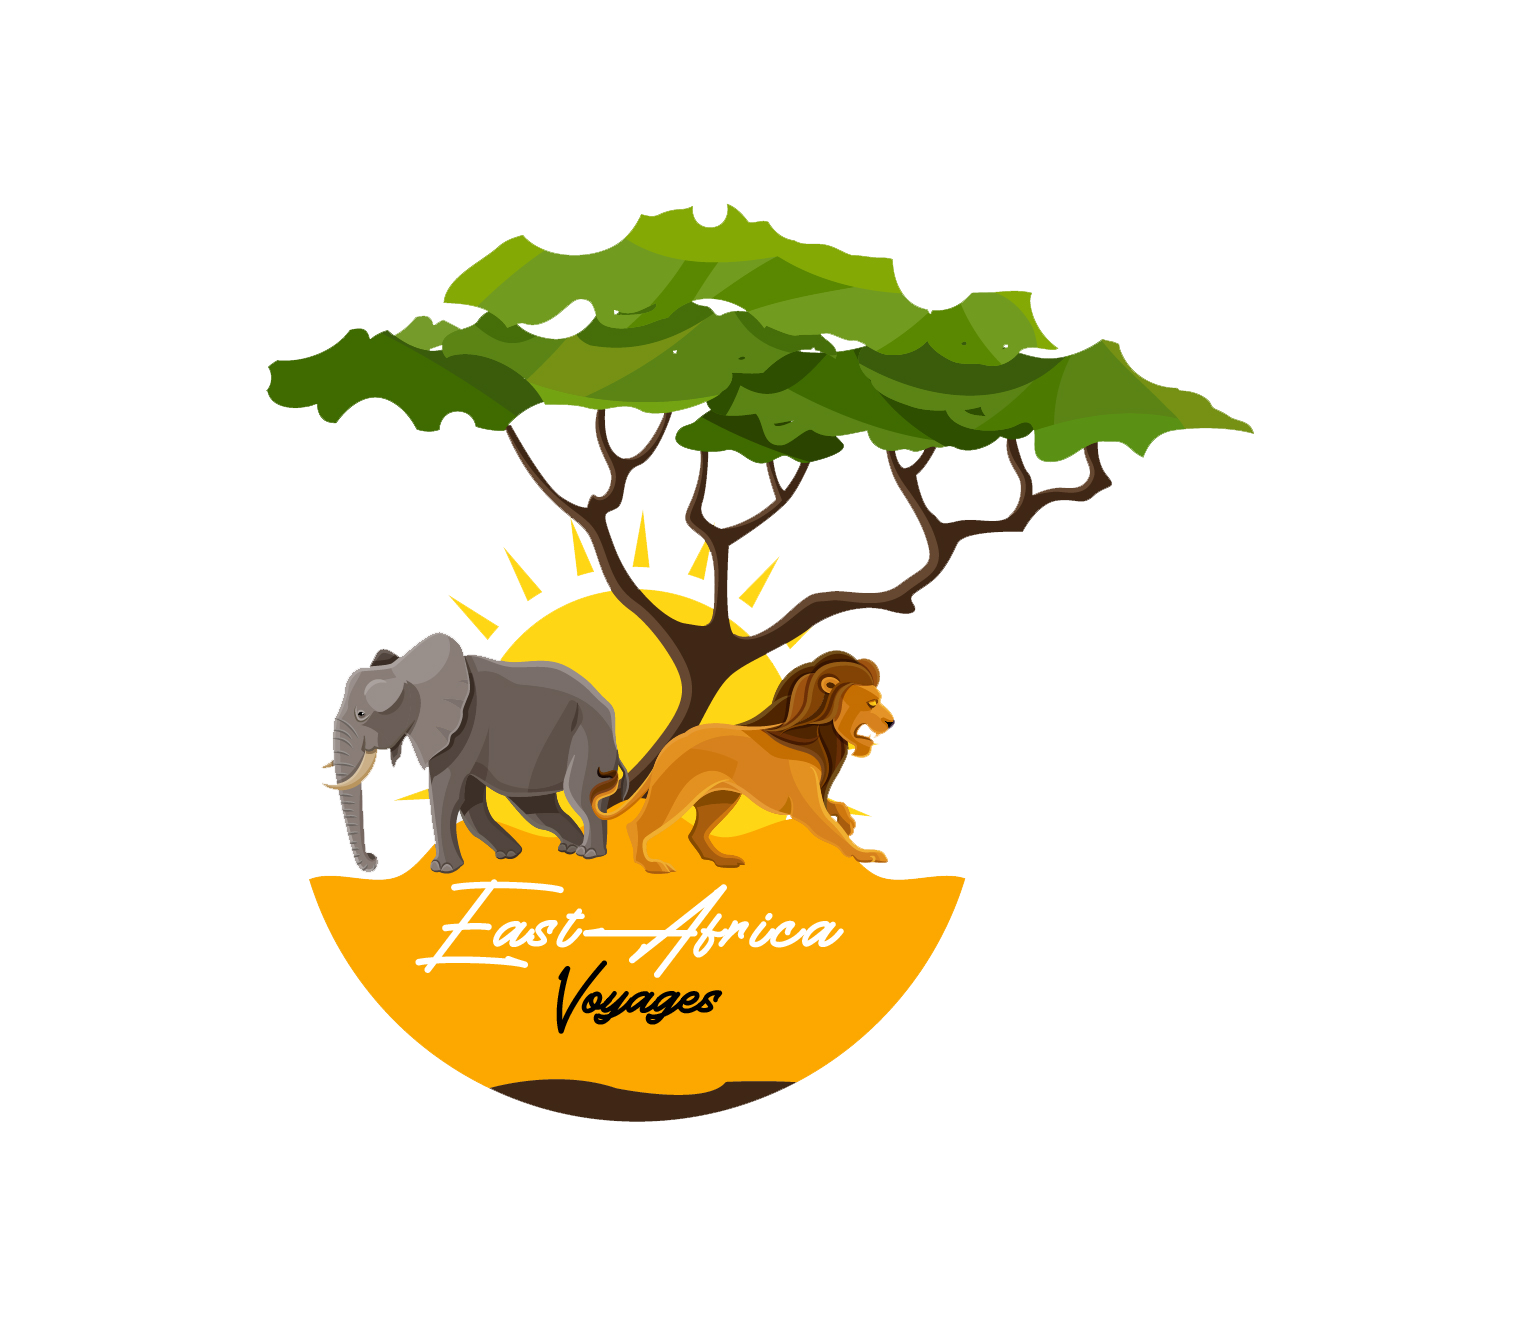 East Africa Voyages logo